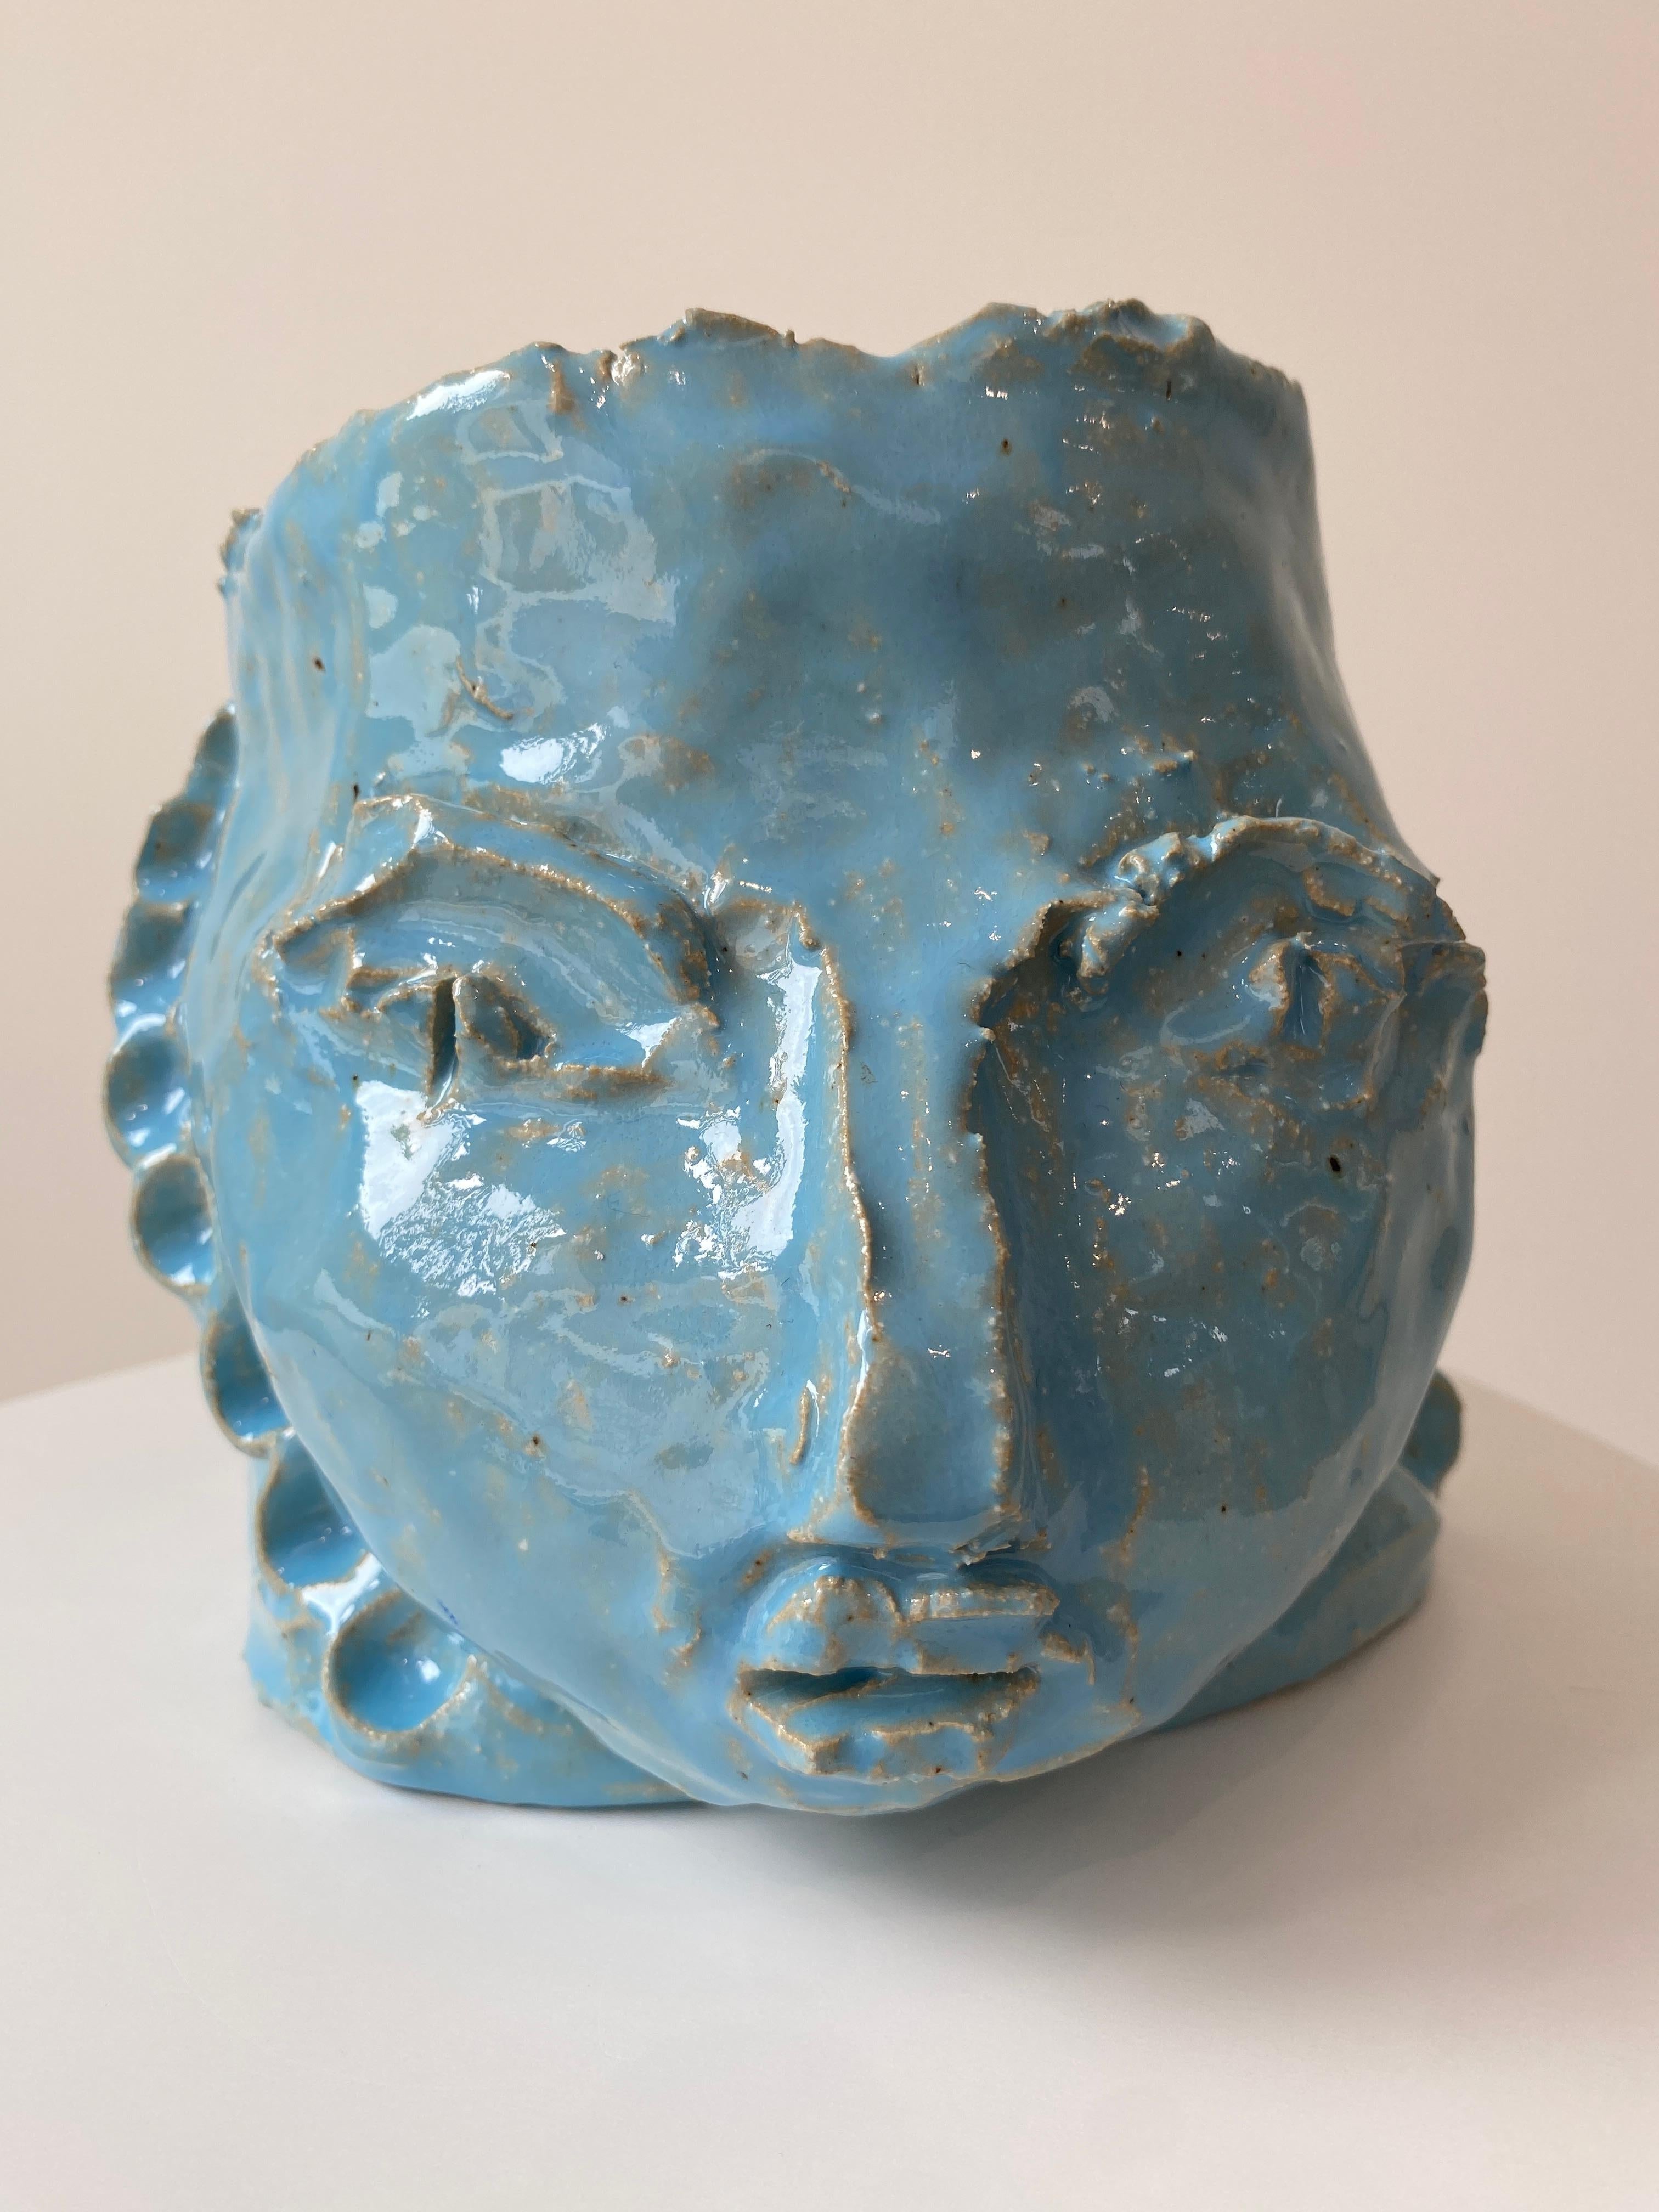 Hellblaue, rustikale, handgeformte Wabi sabi-Vase aus glasiertem Ton mit Kopfteil aus Glasur